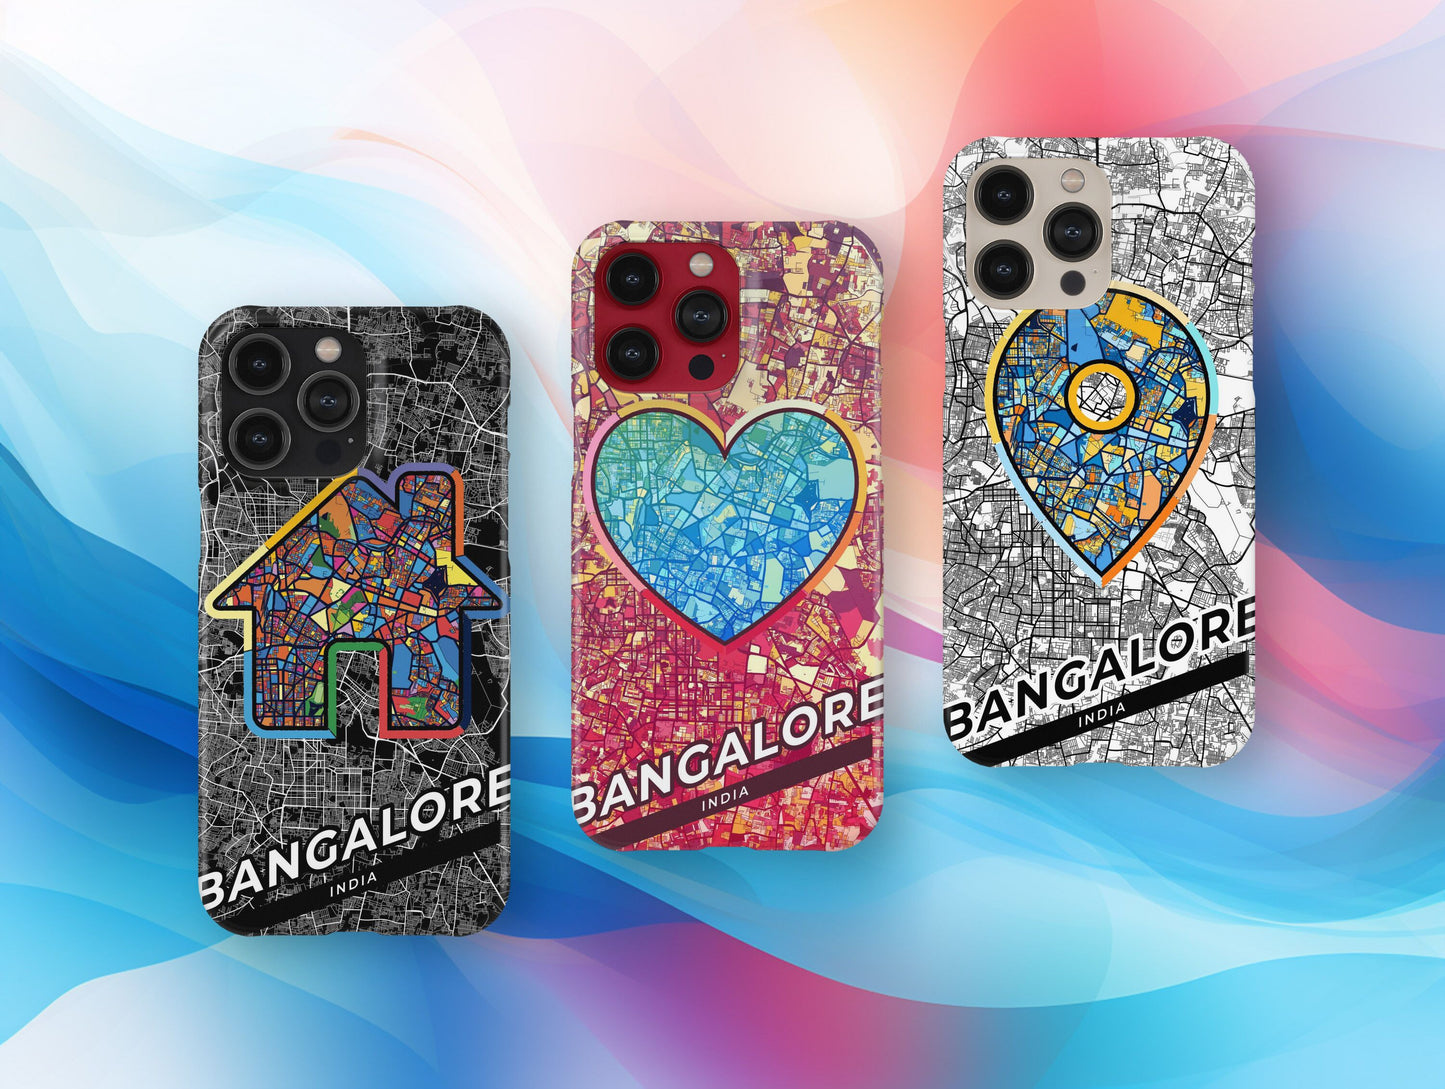 Bangalore India slim phone case with colorful icon. Birthday, wedding or housewarming gift. Couple match cases.